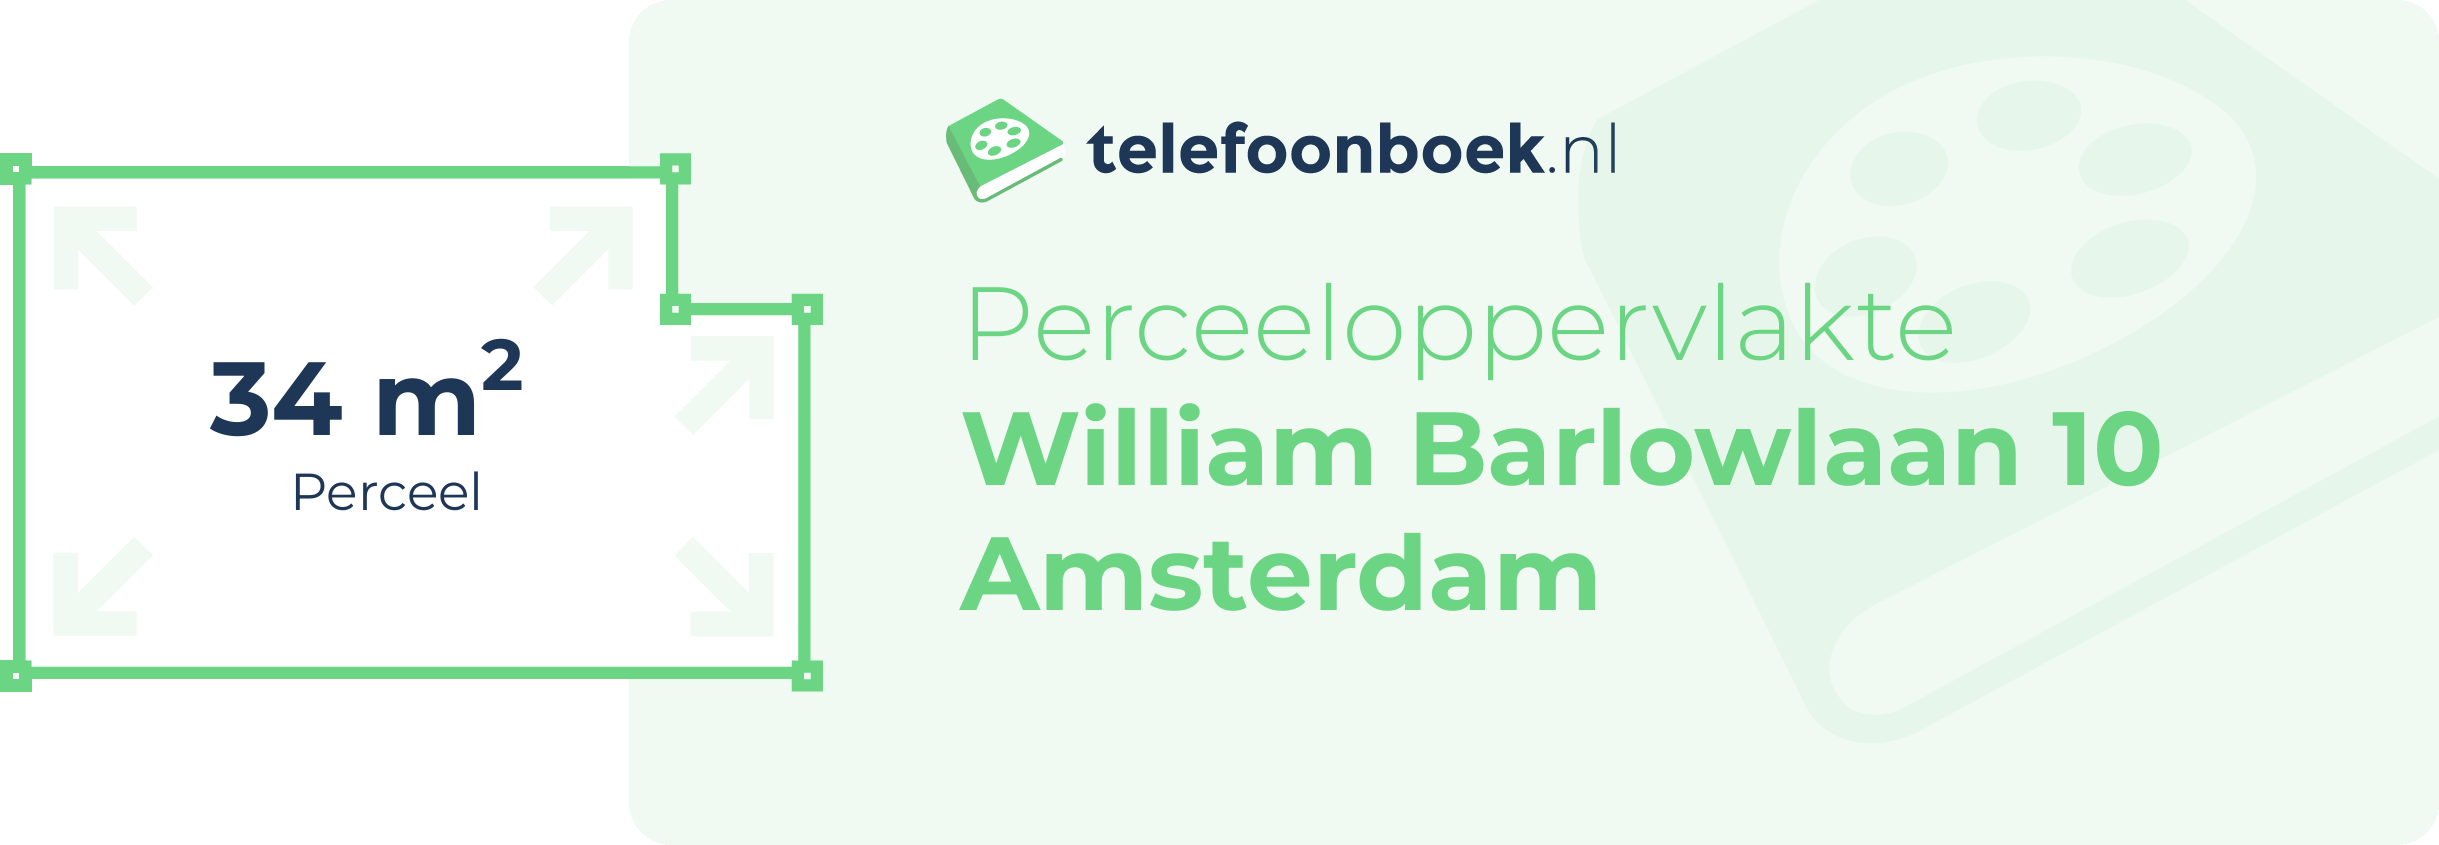 Perceeloppervlakte William Barlowlaan 10 Amsterdam